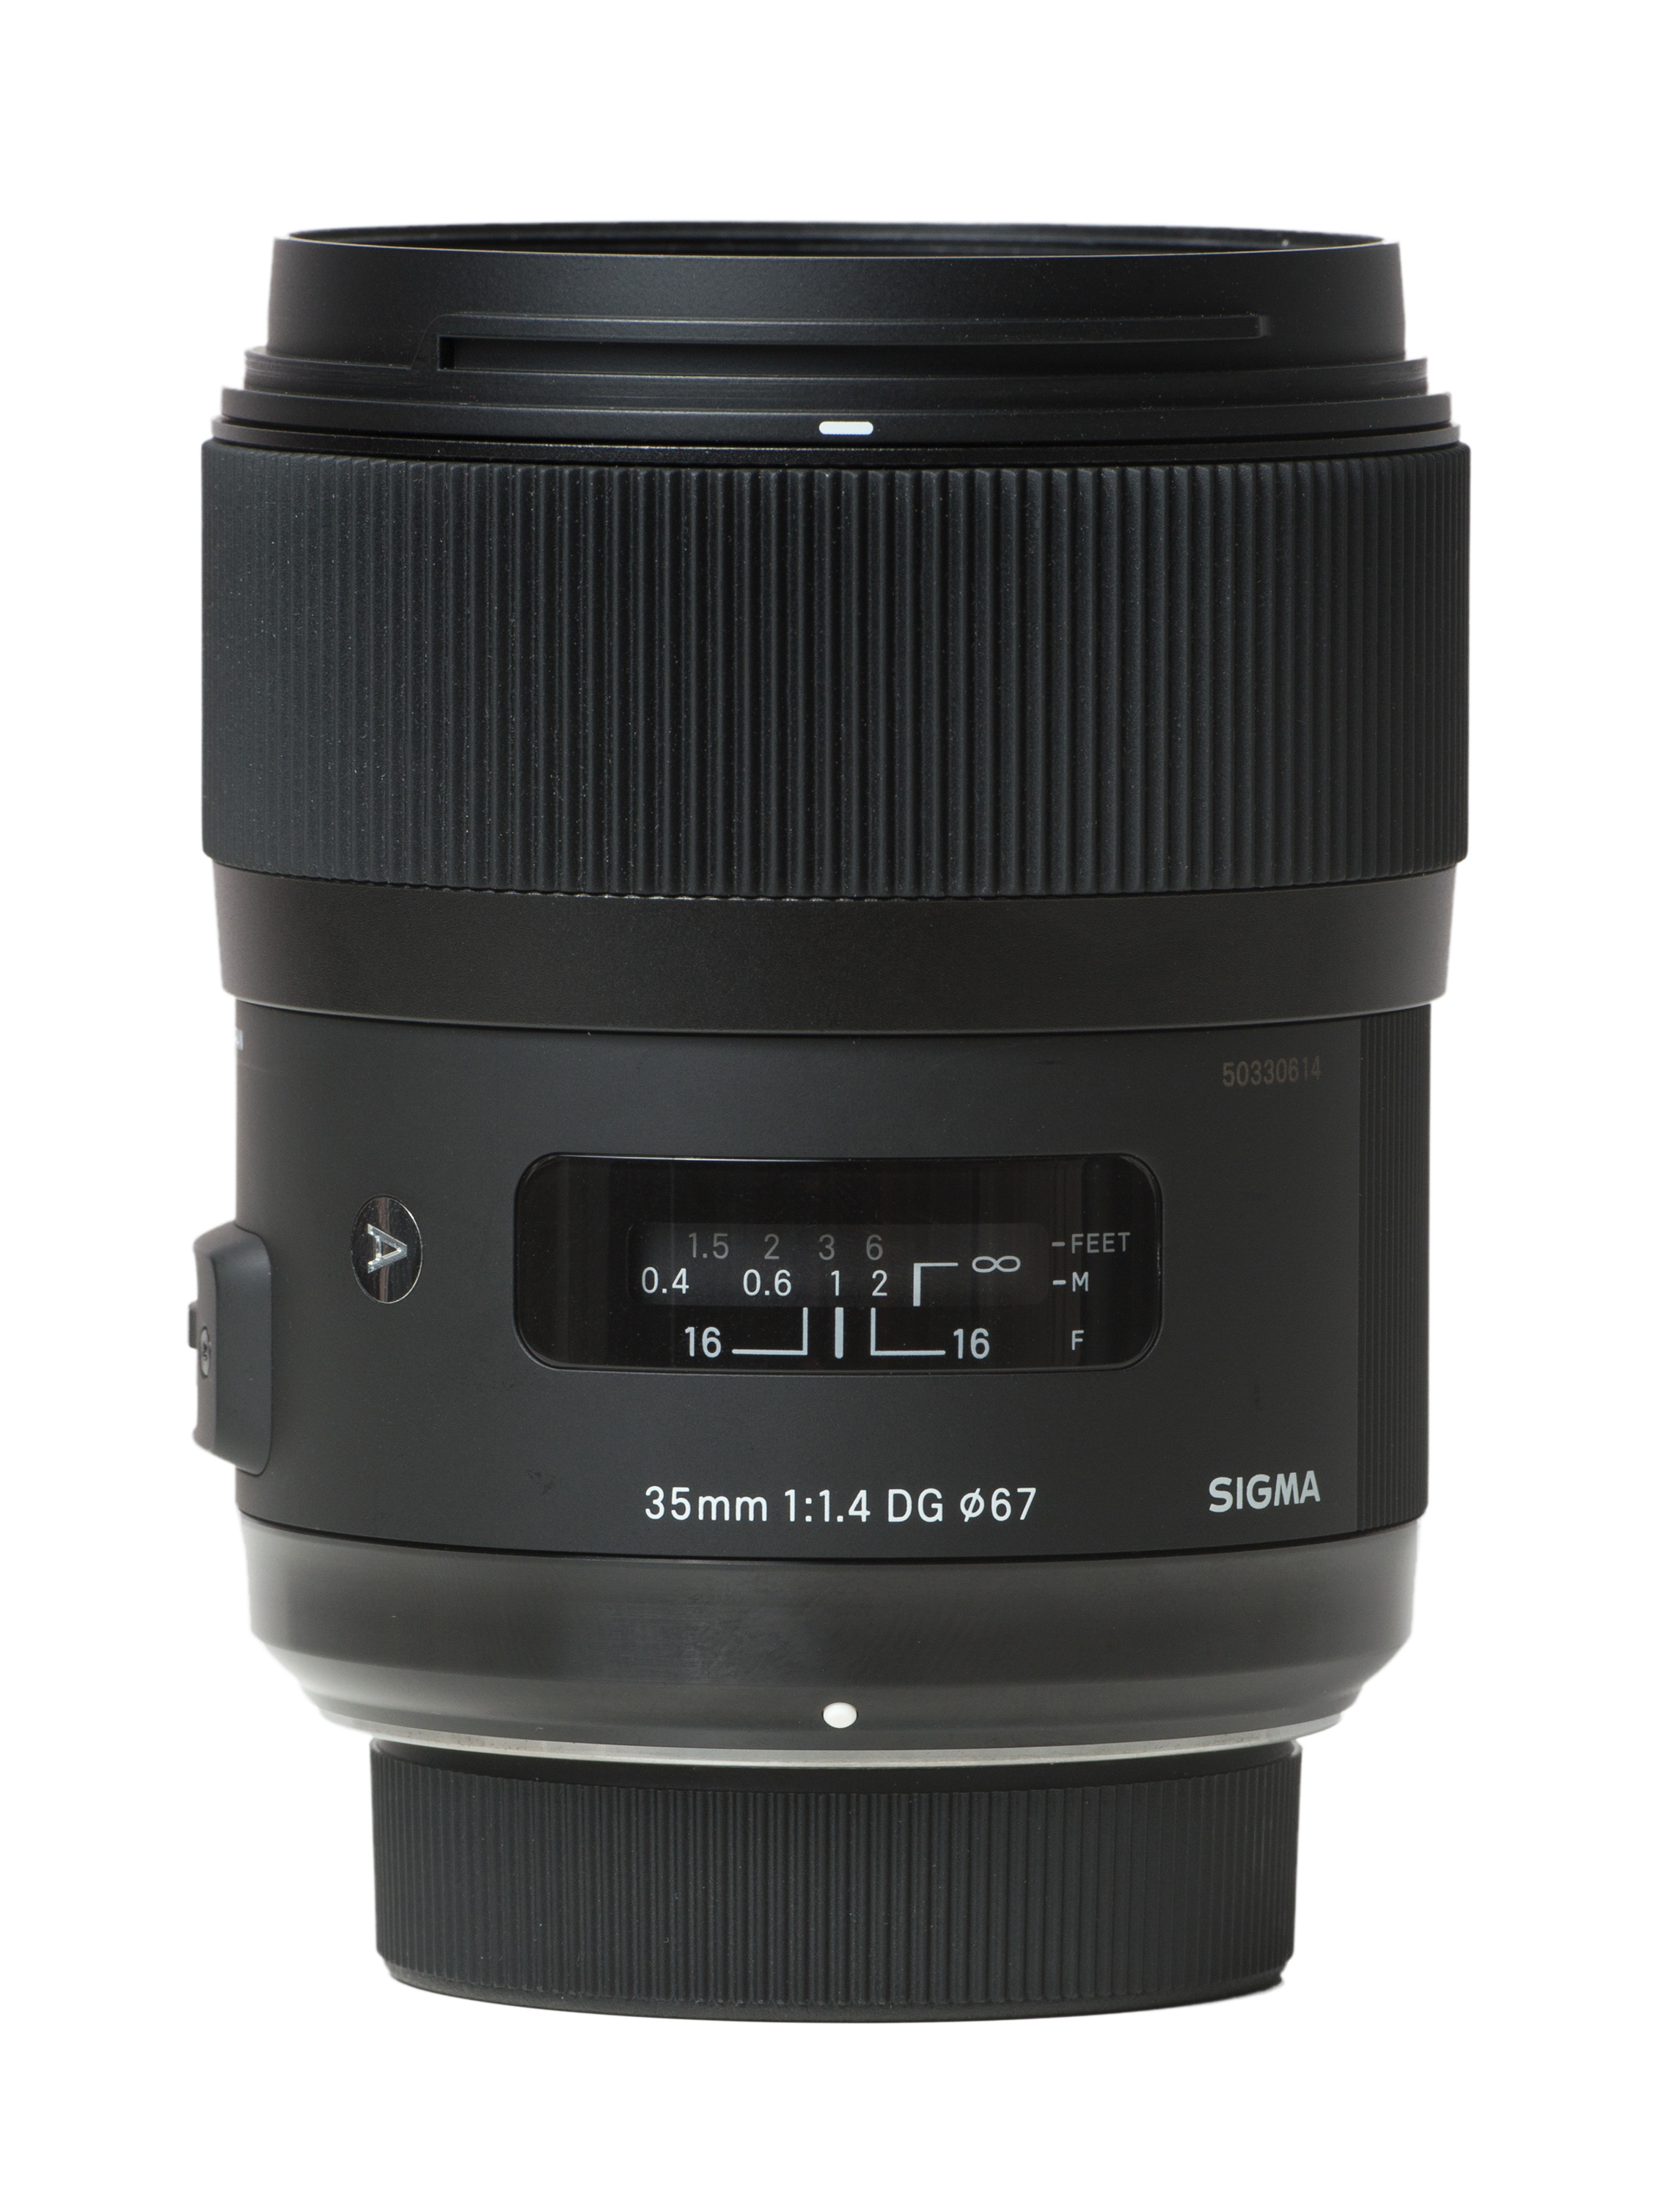 Sigma 35 mm f/1.4 DG HSM lens - Wikipedia